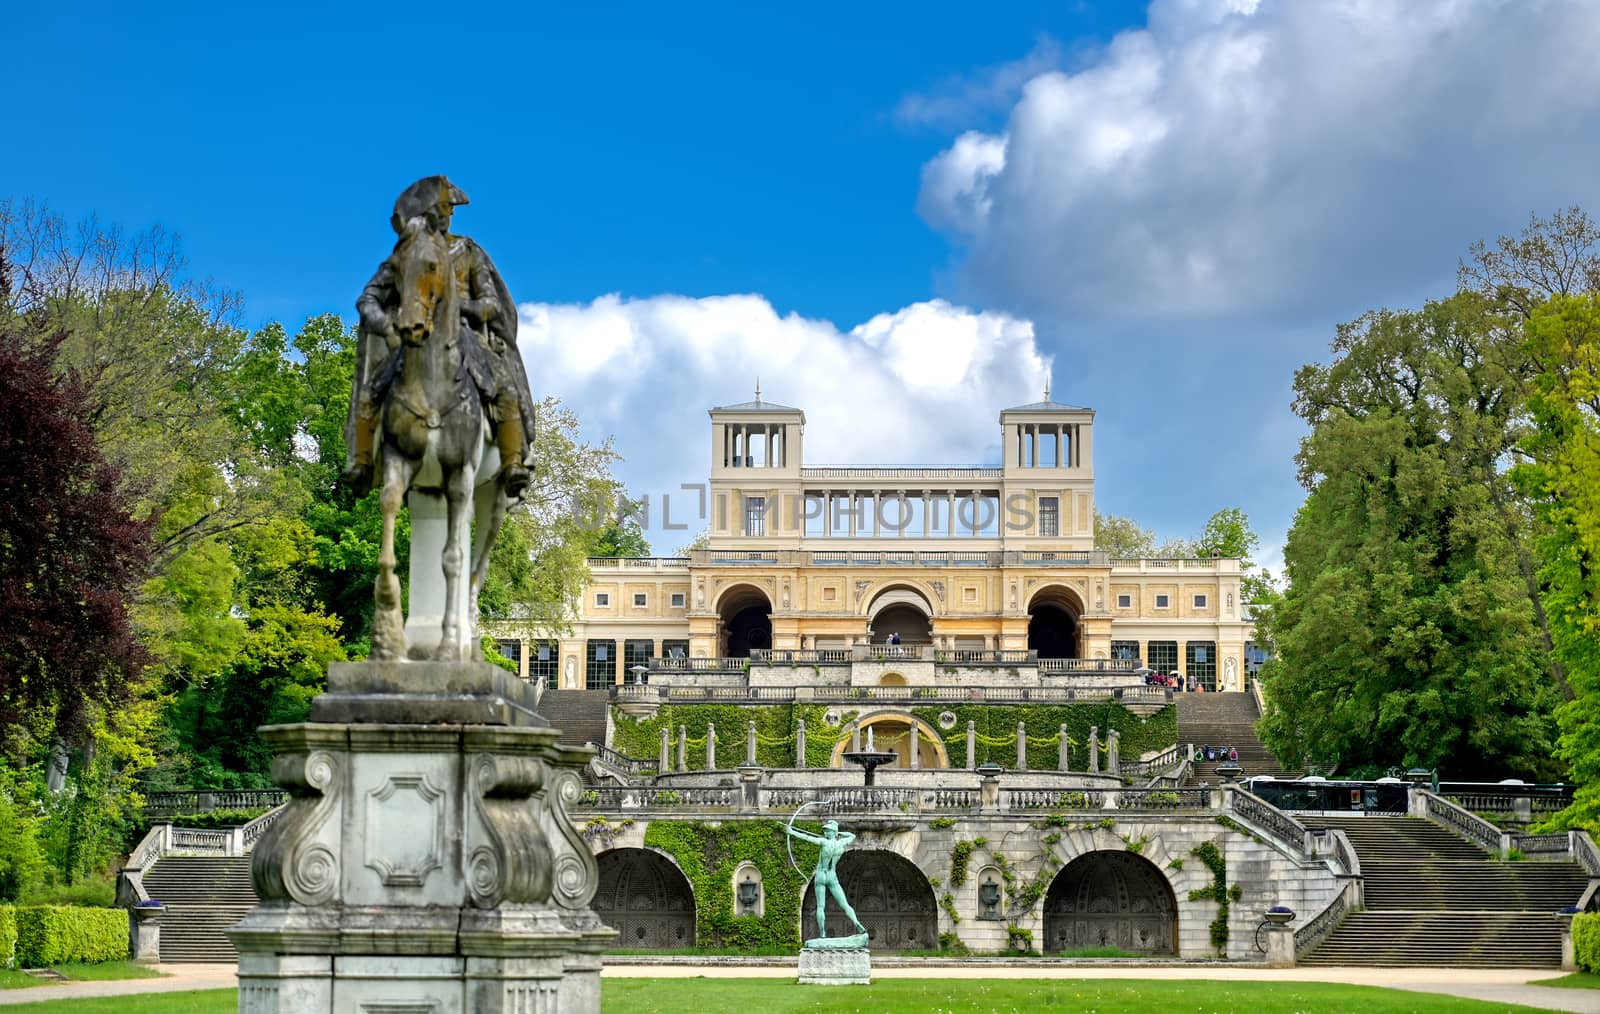 The Orangery Palace in Potsdam, Germany by jbyard22